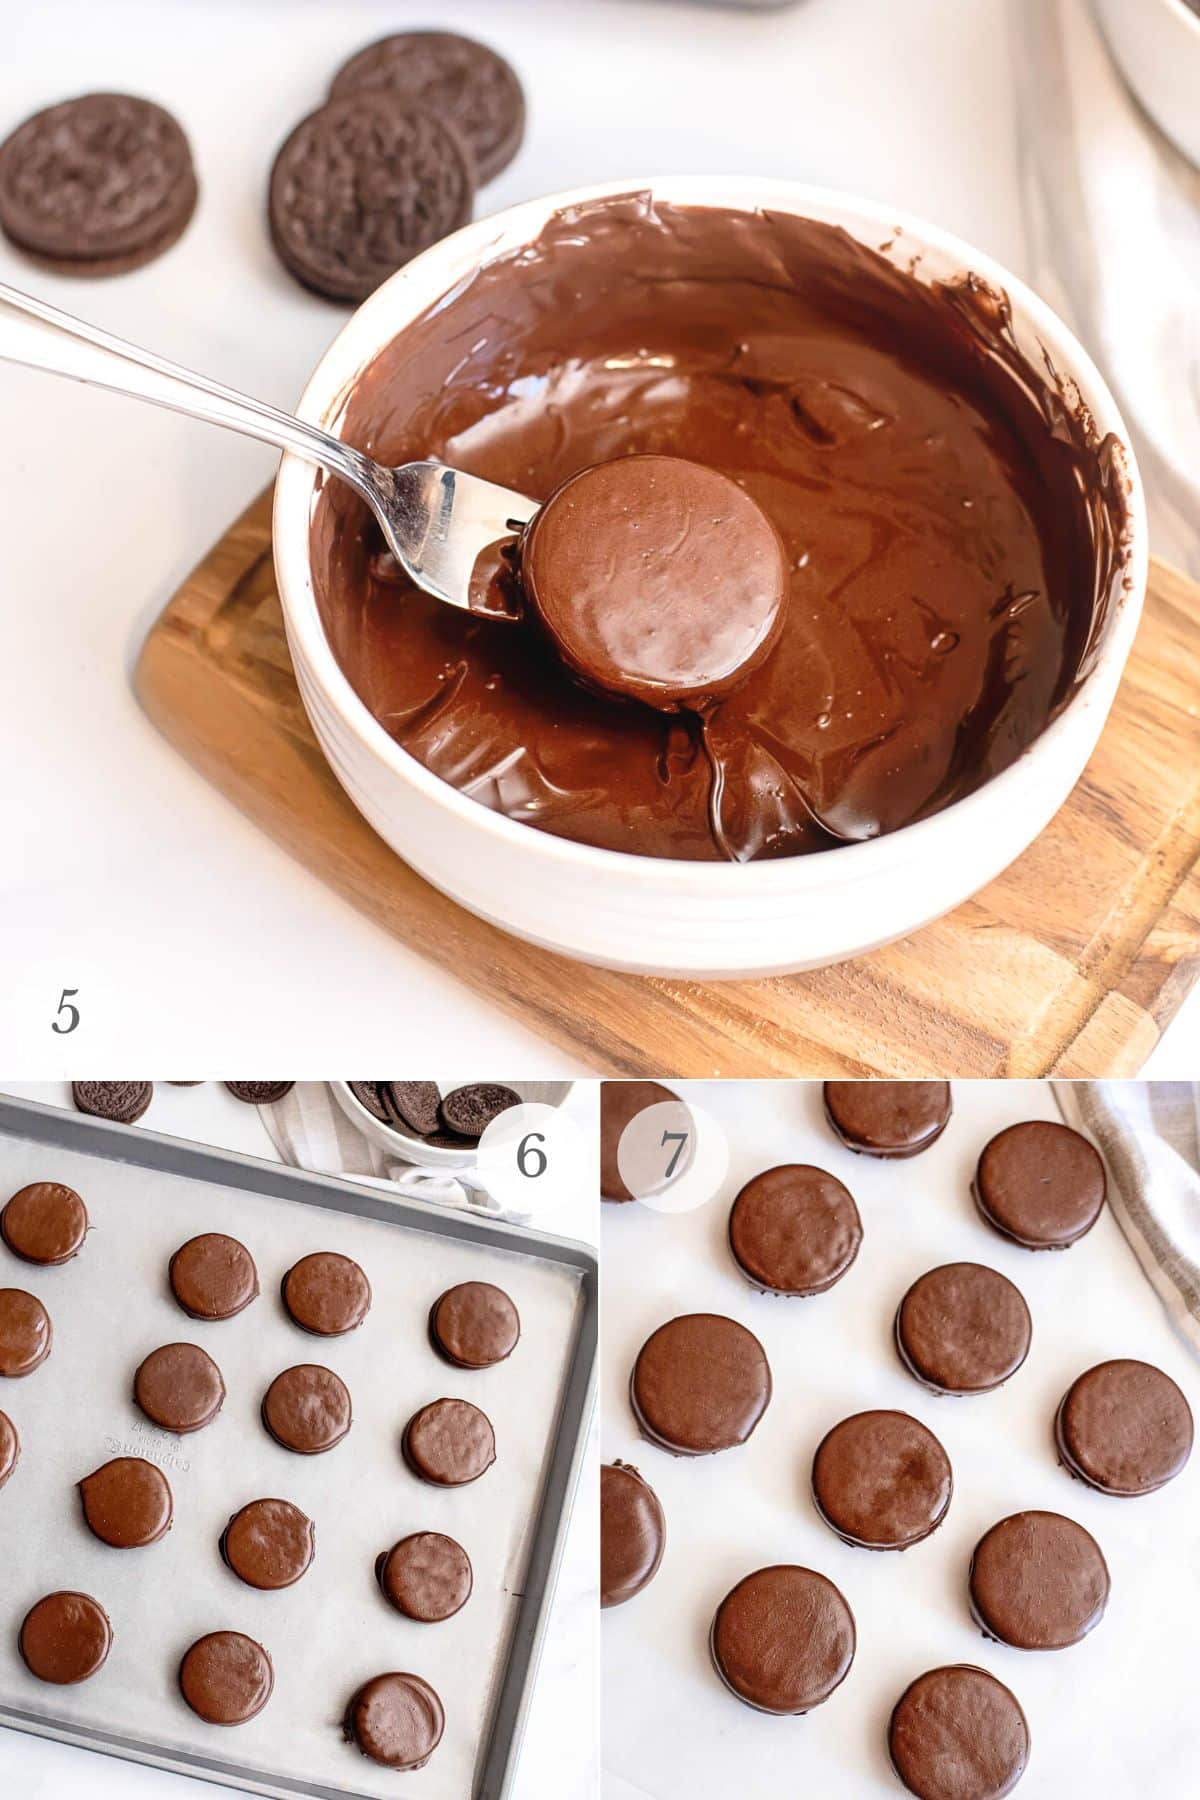 chocolate covered Oreos recipe steps 5-7.